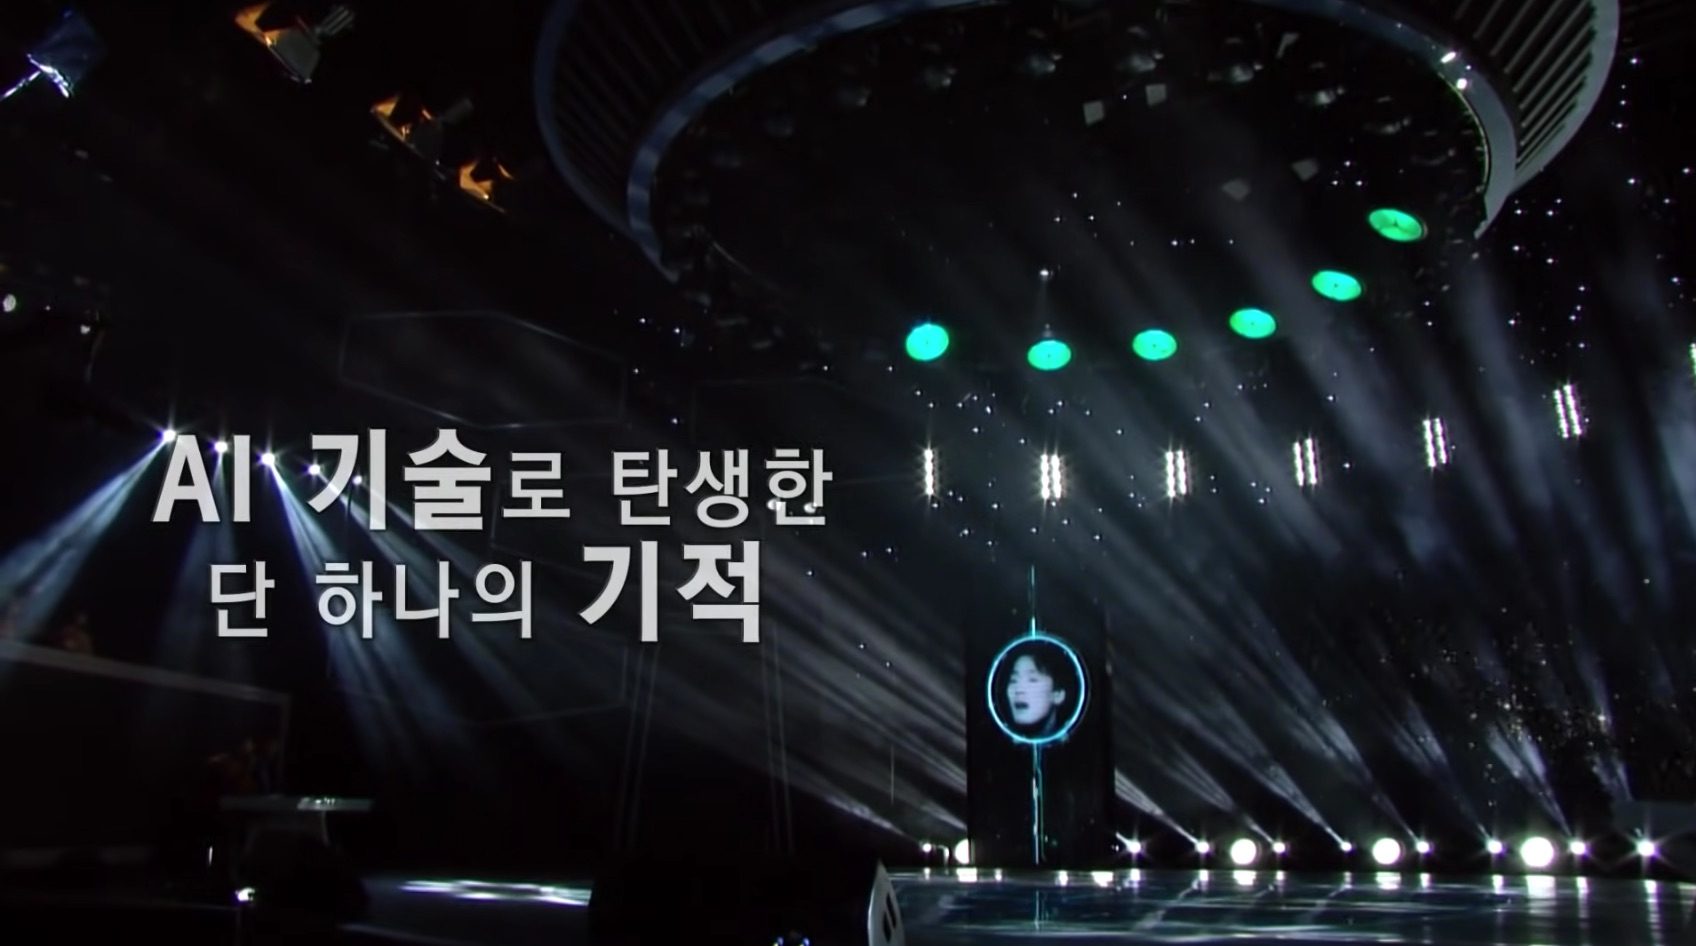 South Korean AI technology brings back folk singer’s voice